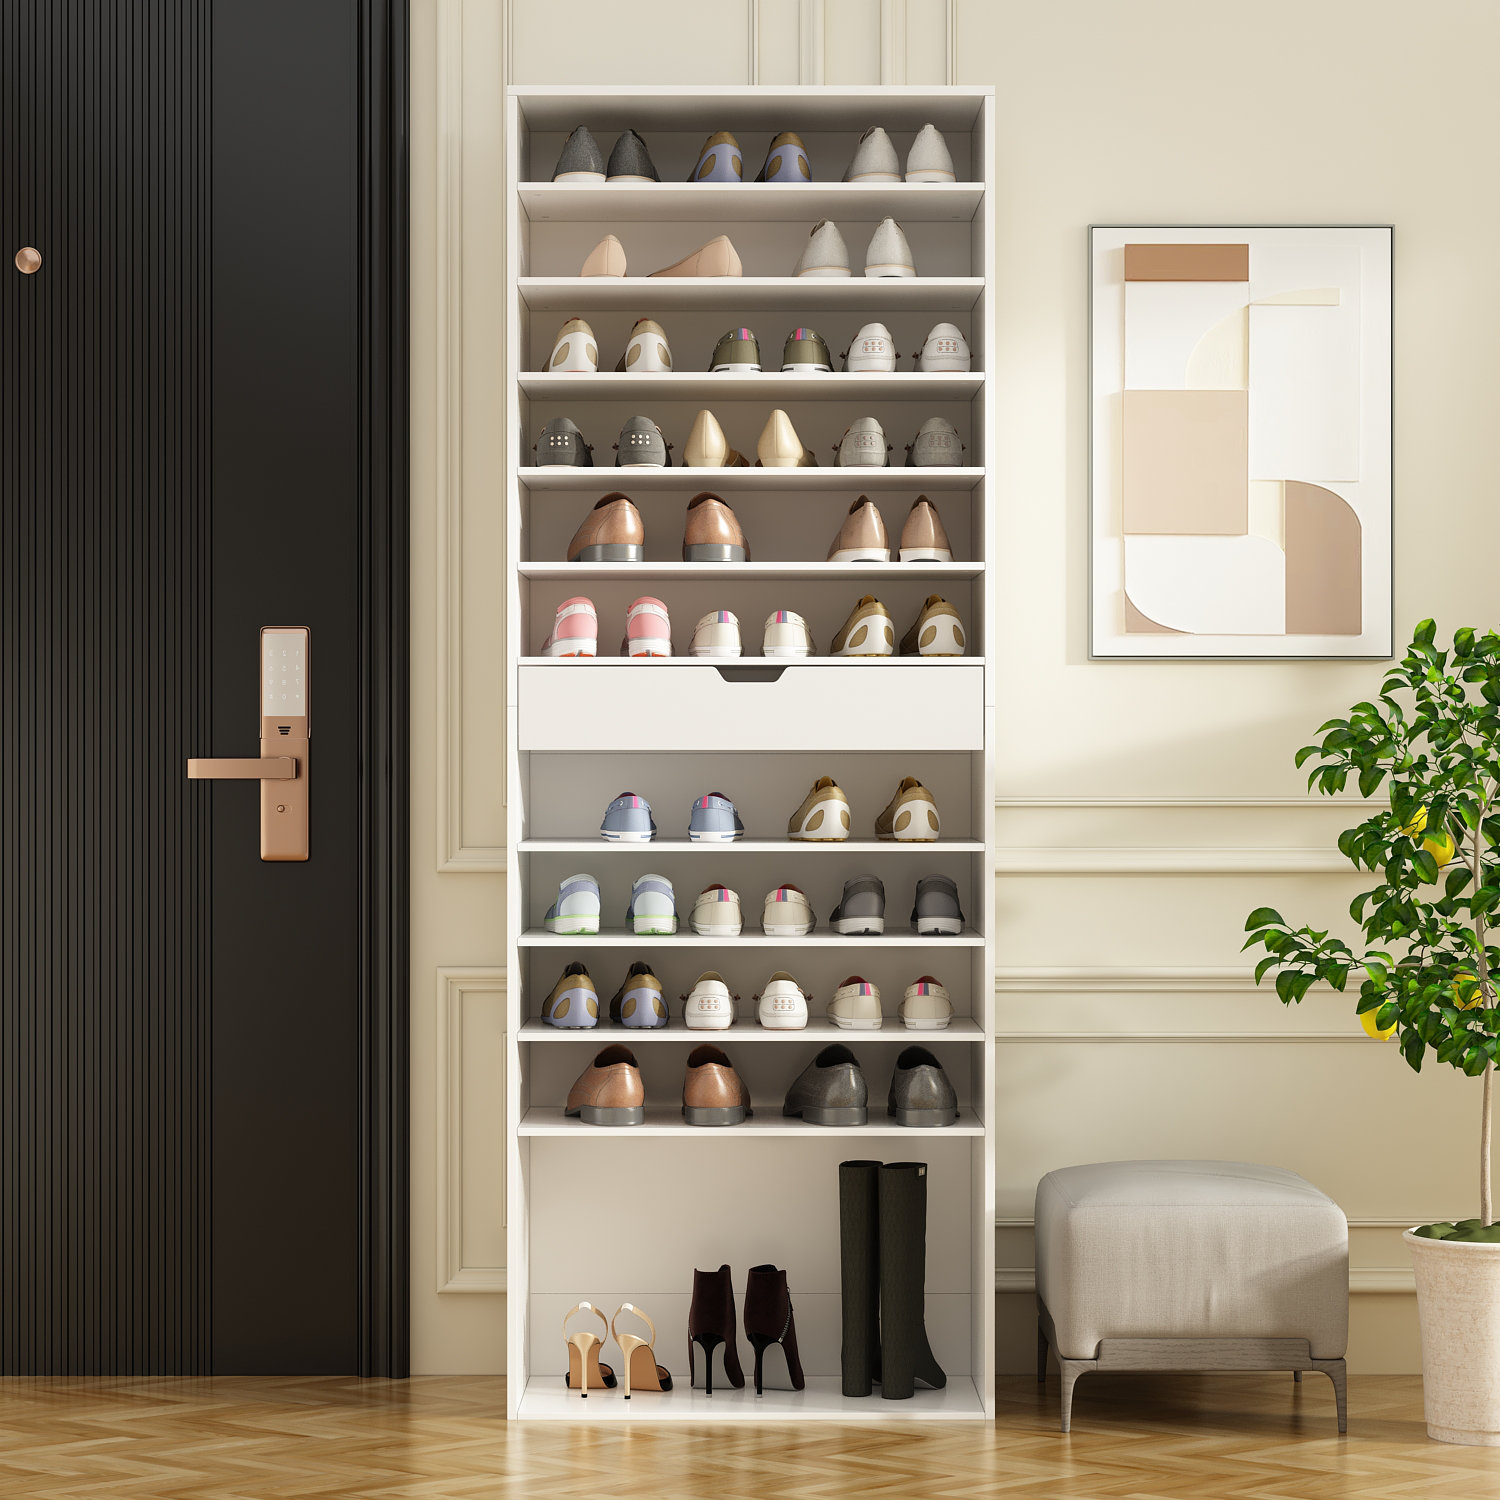 MACKAPÄR Shoe/storage cabinet, white - IKEA